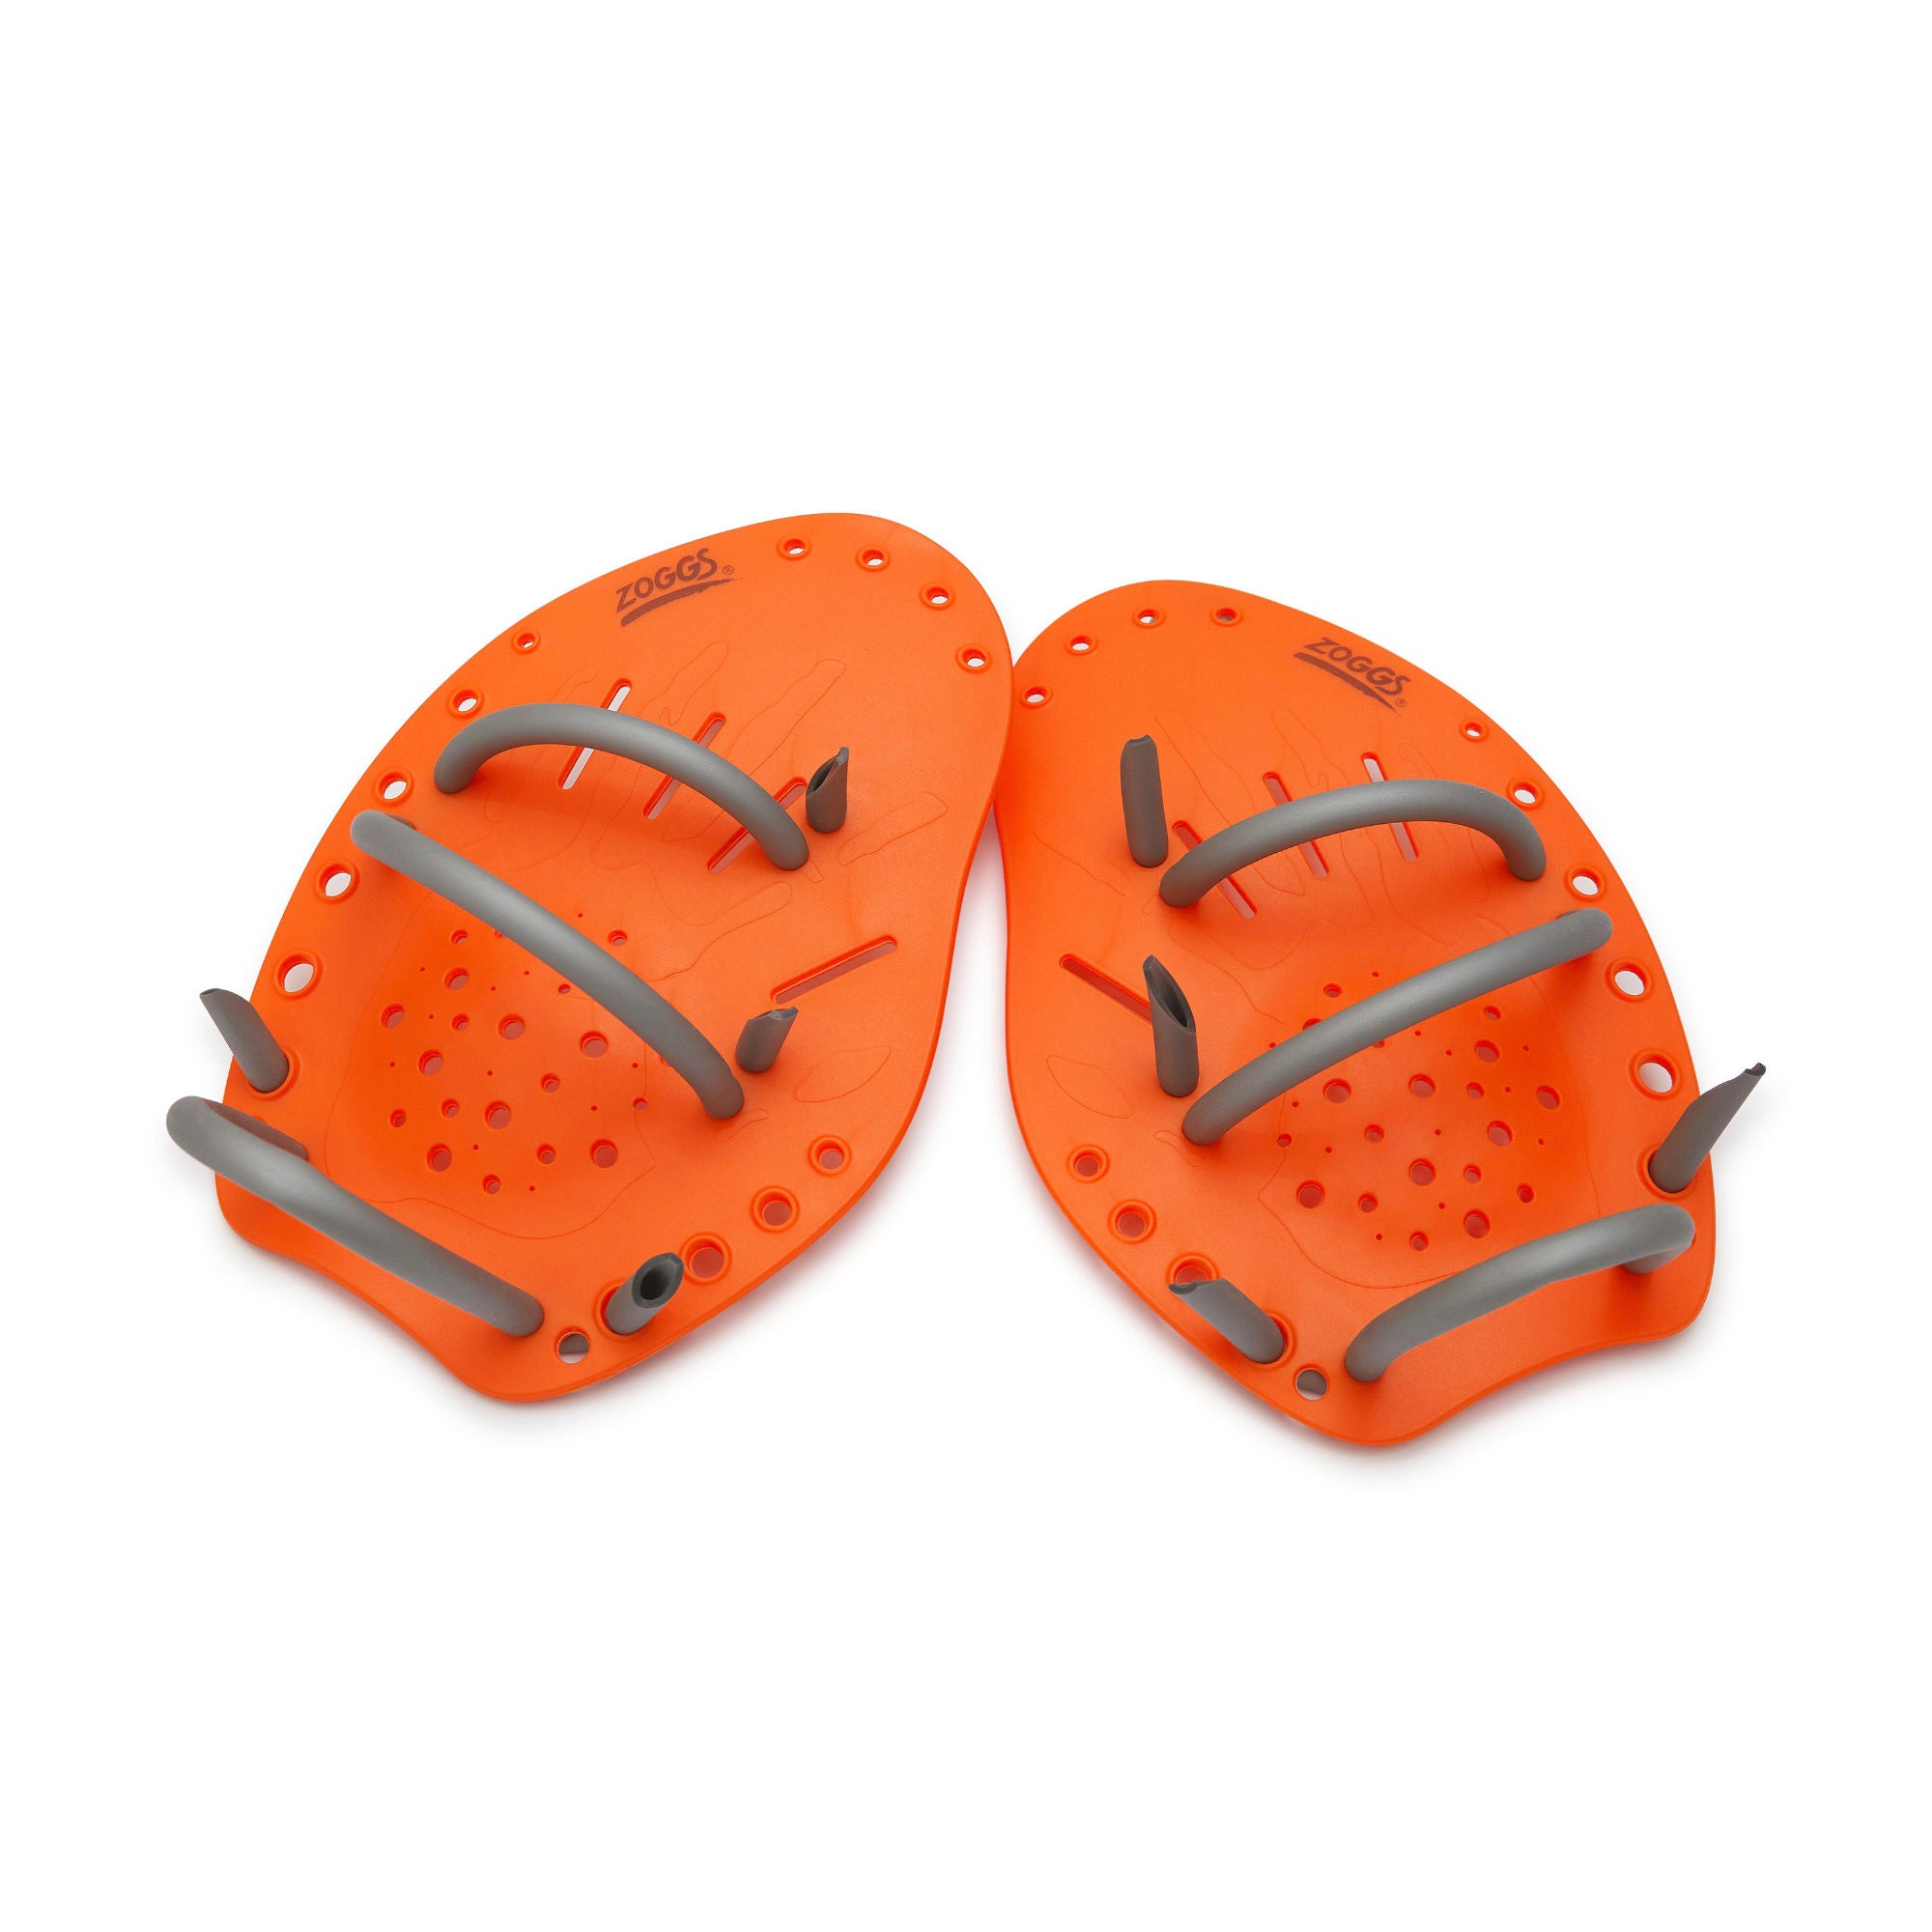 Zoggs Hand Paddles in orange